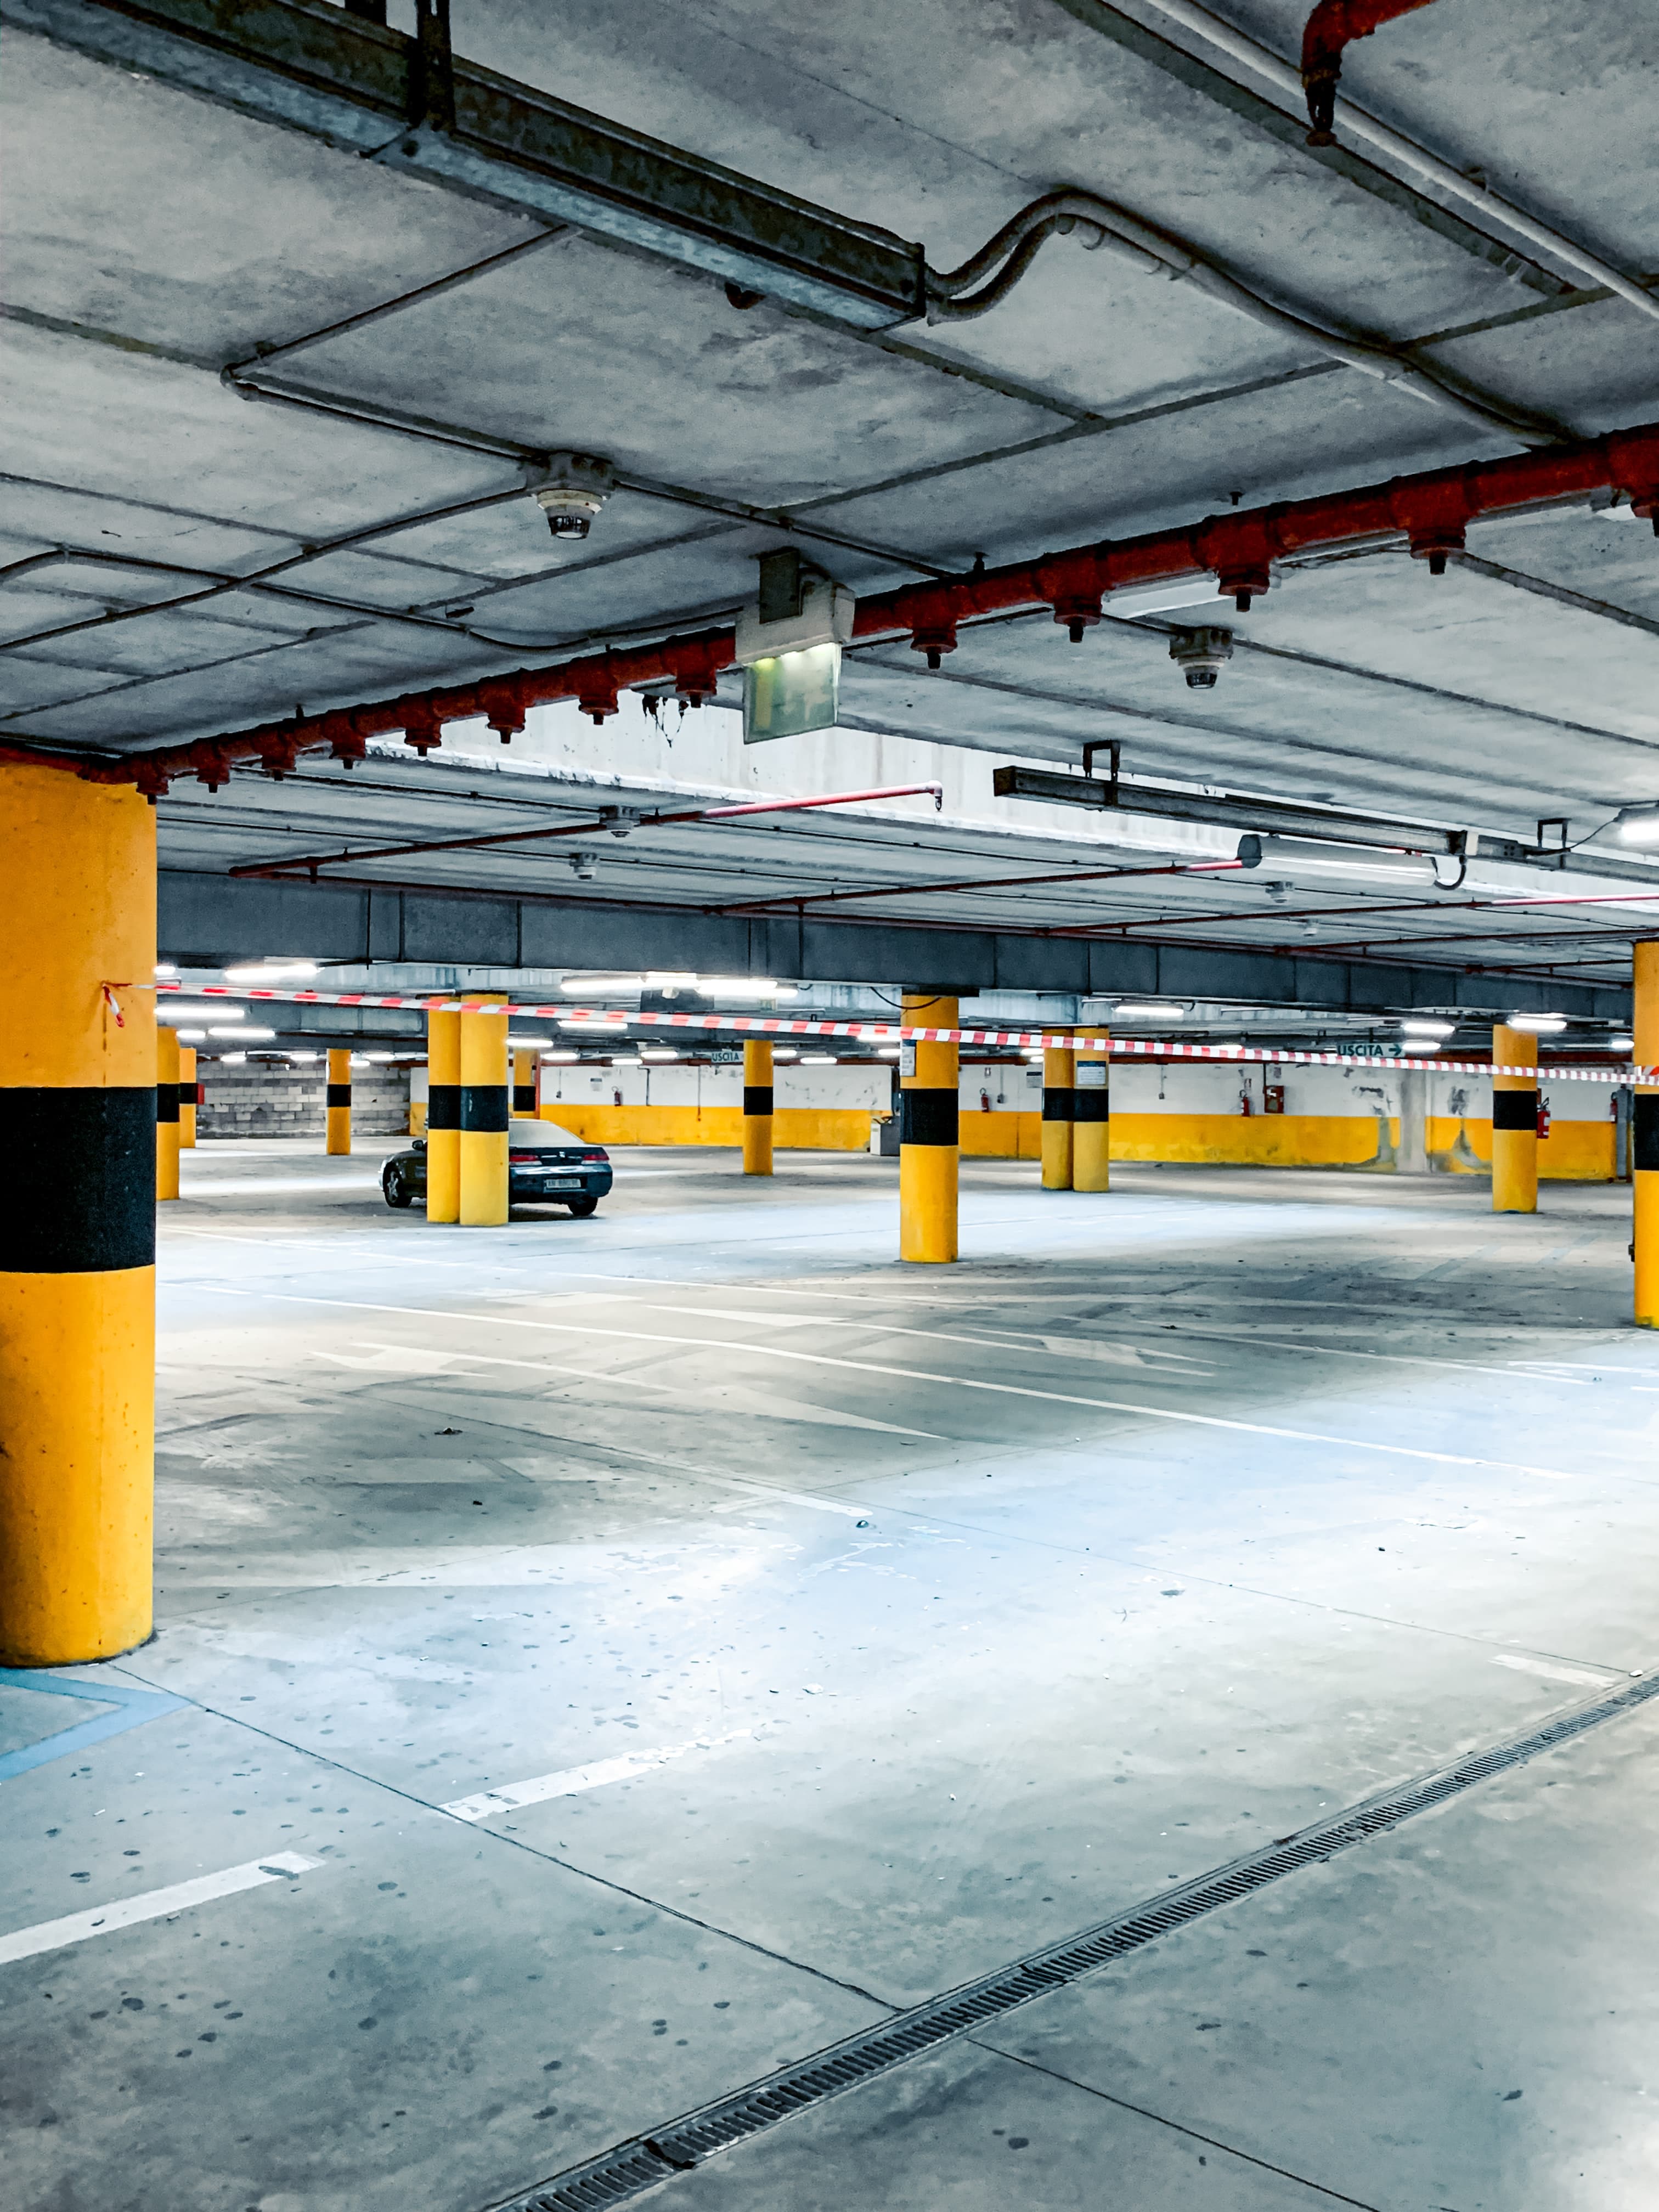 parking garage safety tips for businesses